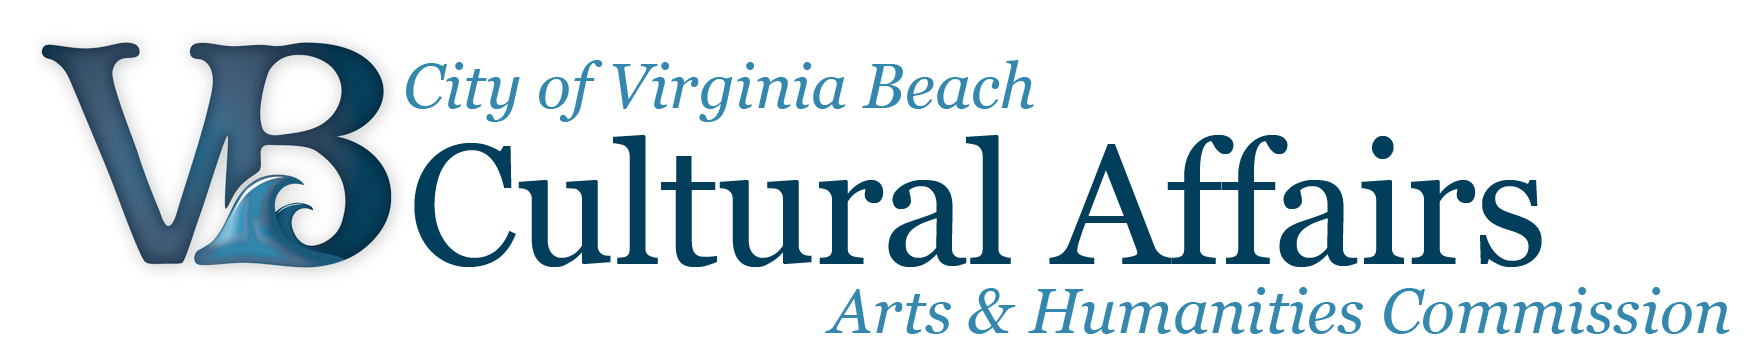 Virginia Beach Arts